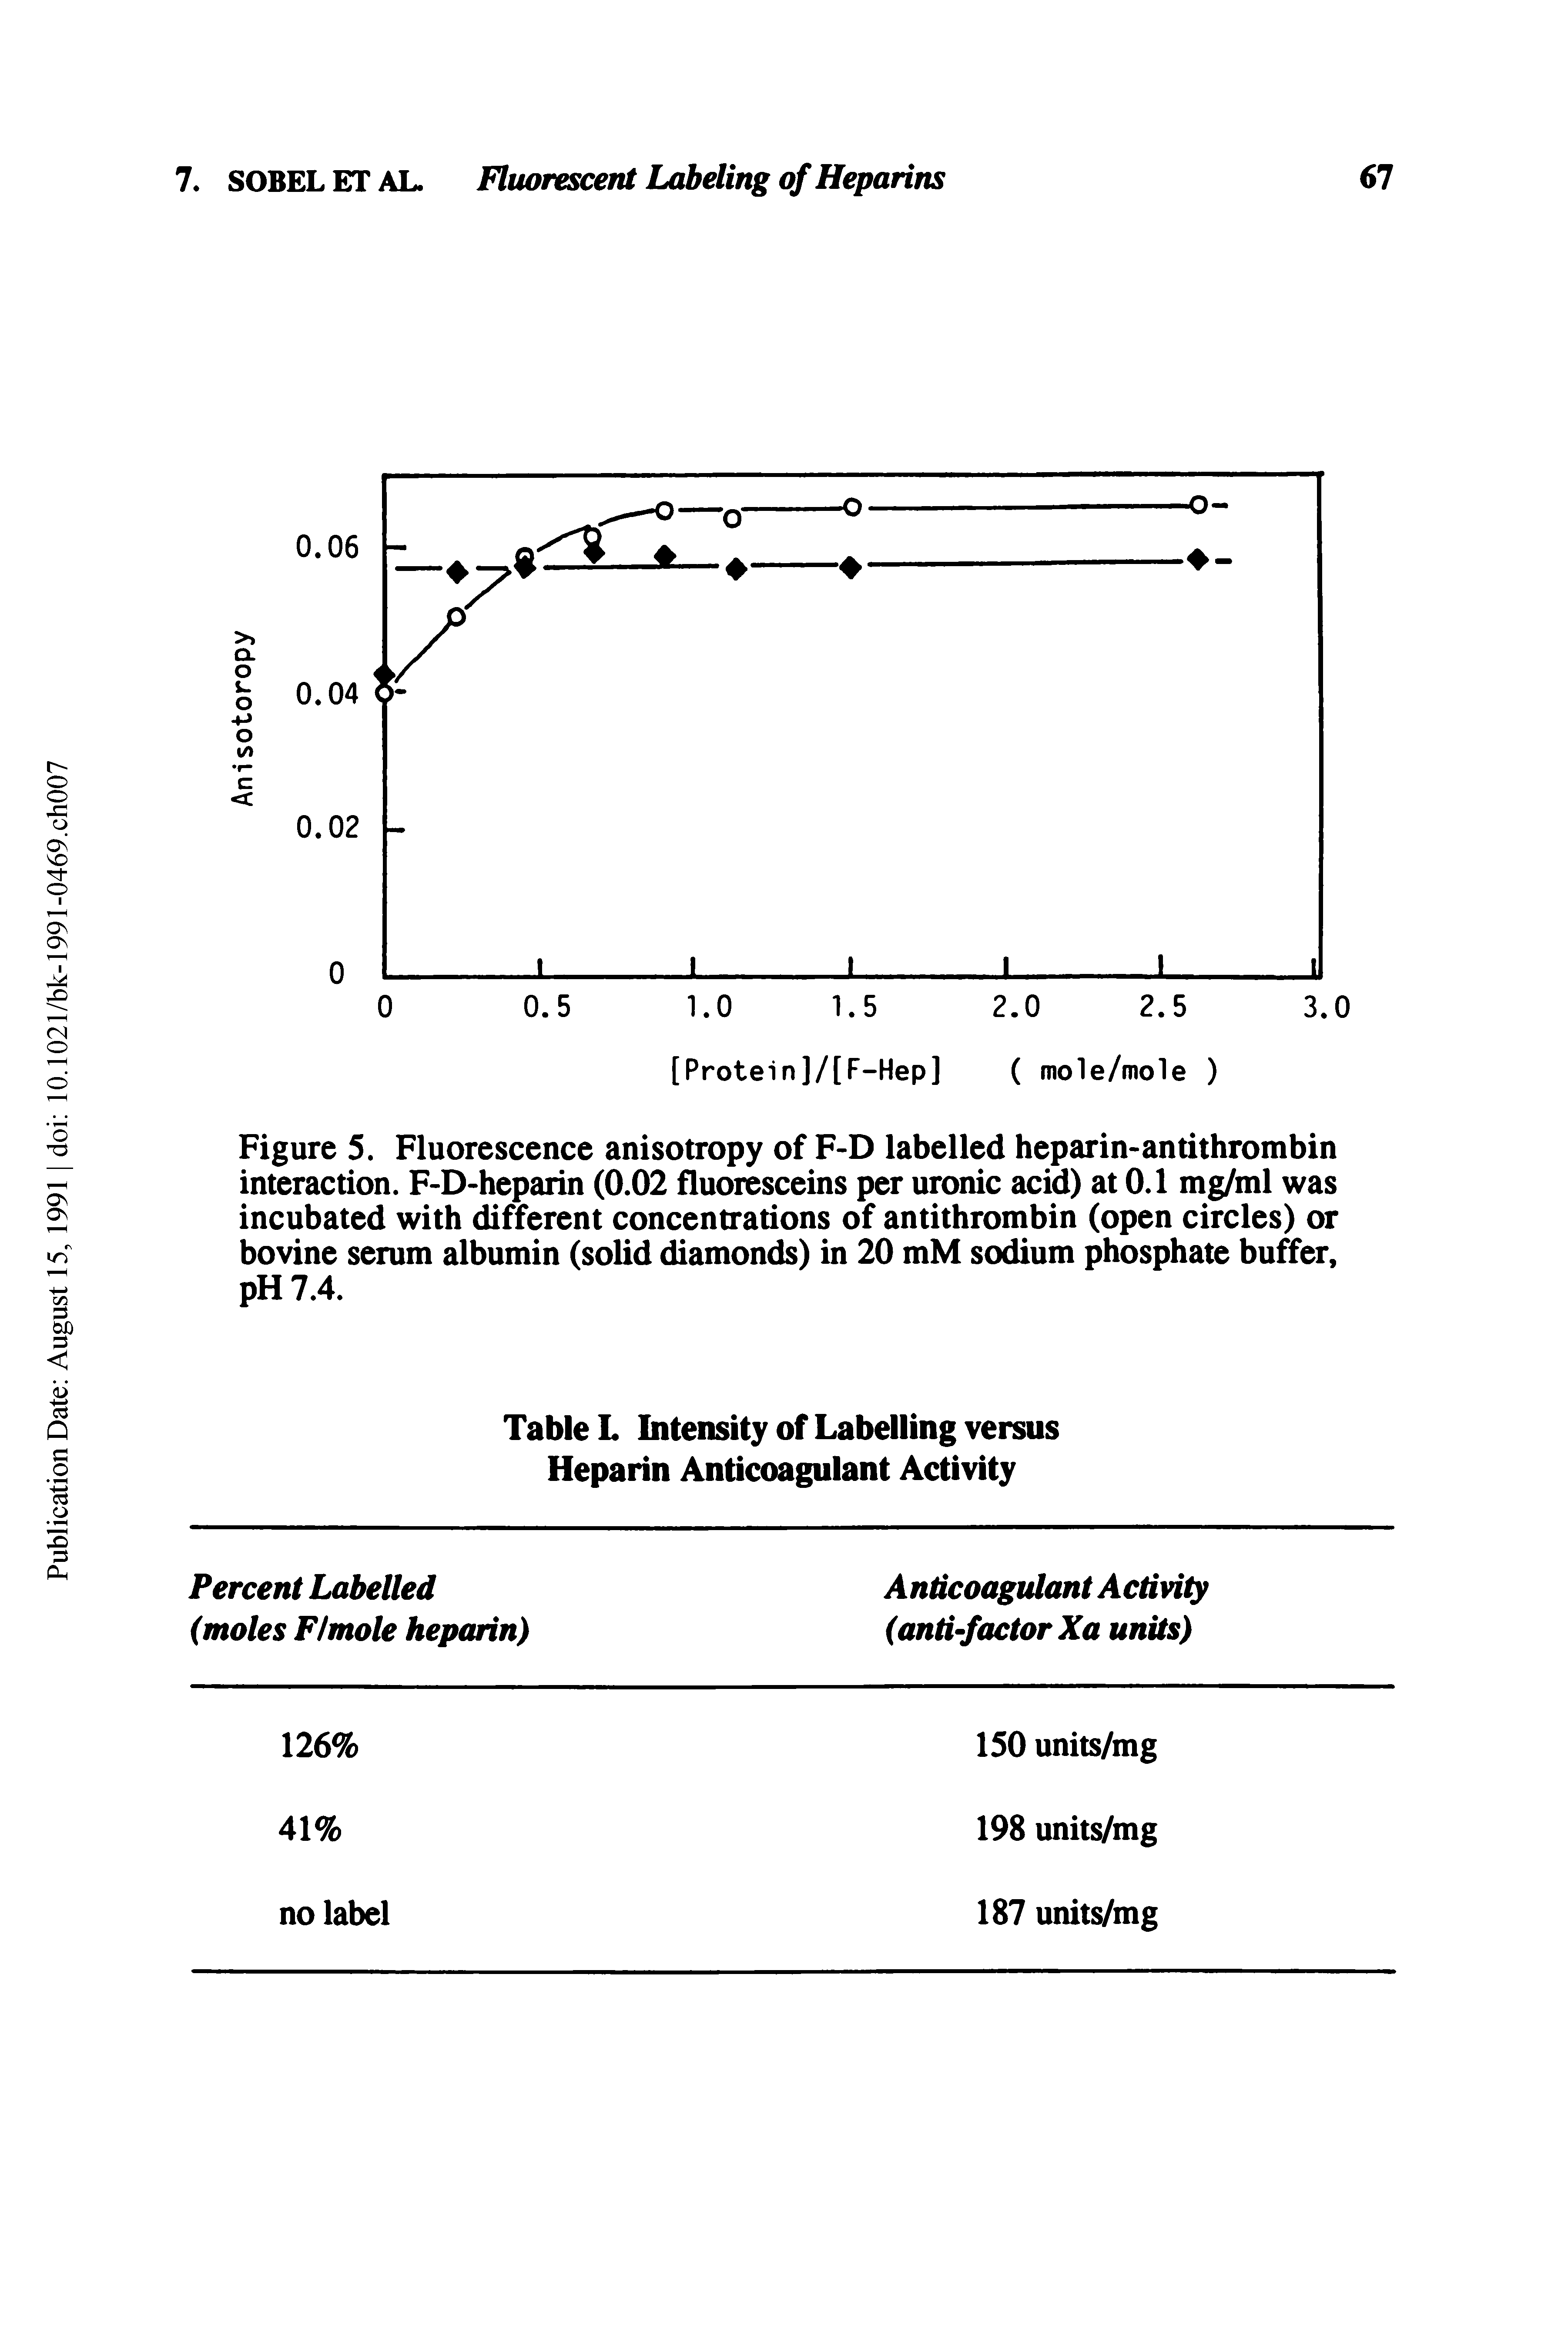 Table L Intensity of Labelling versus Heparin Anticoagulant Activity...